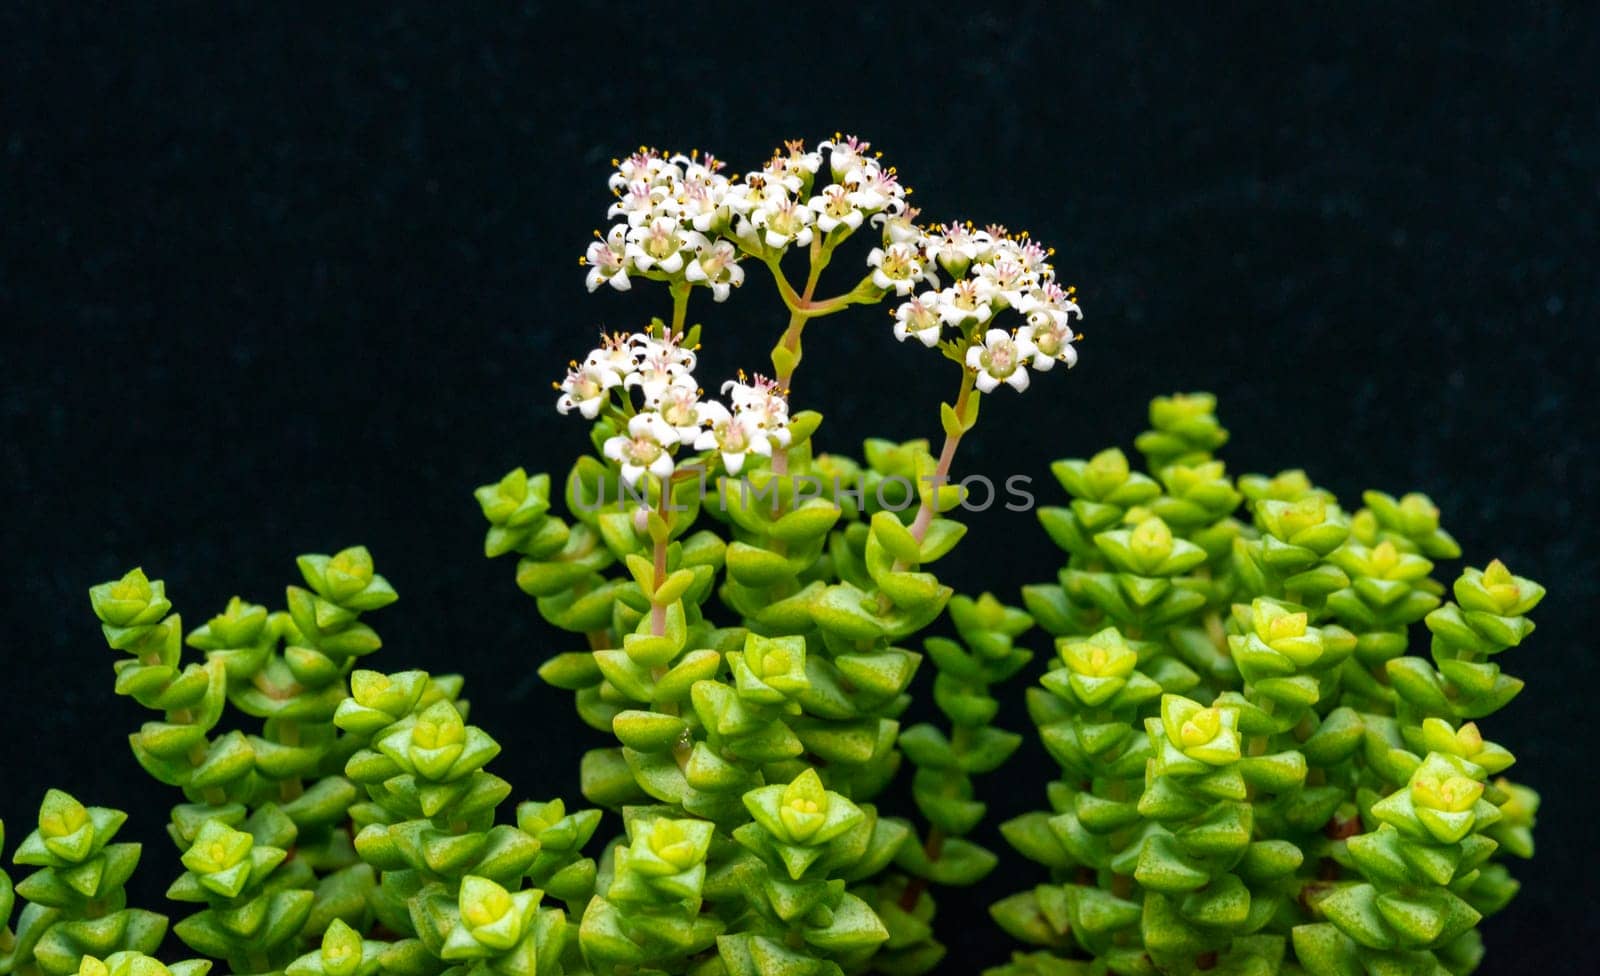 (Crassula rupestris, Crassulaceae) succulent plant with succulent leaves by Hydrobiolog